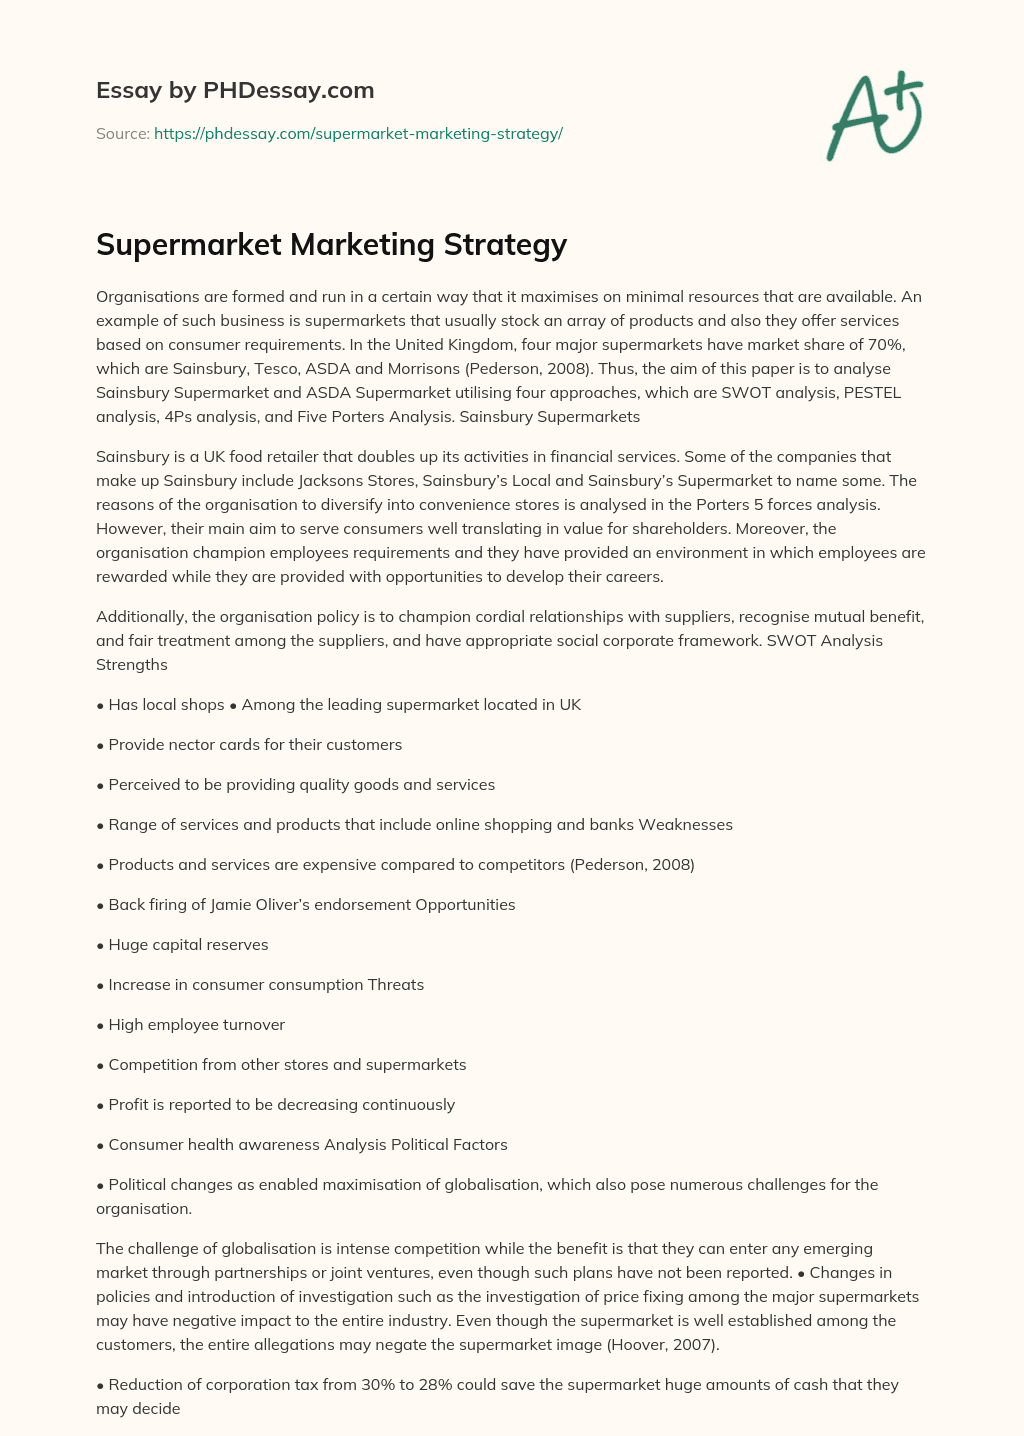 Supermarket Marketing Strategy essay